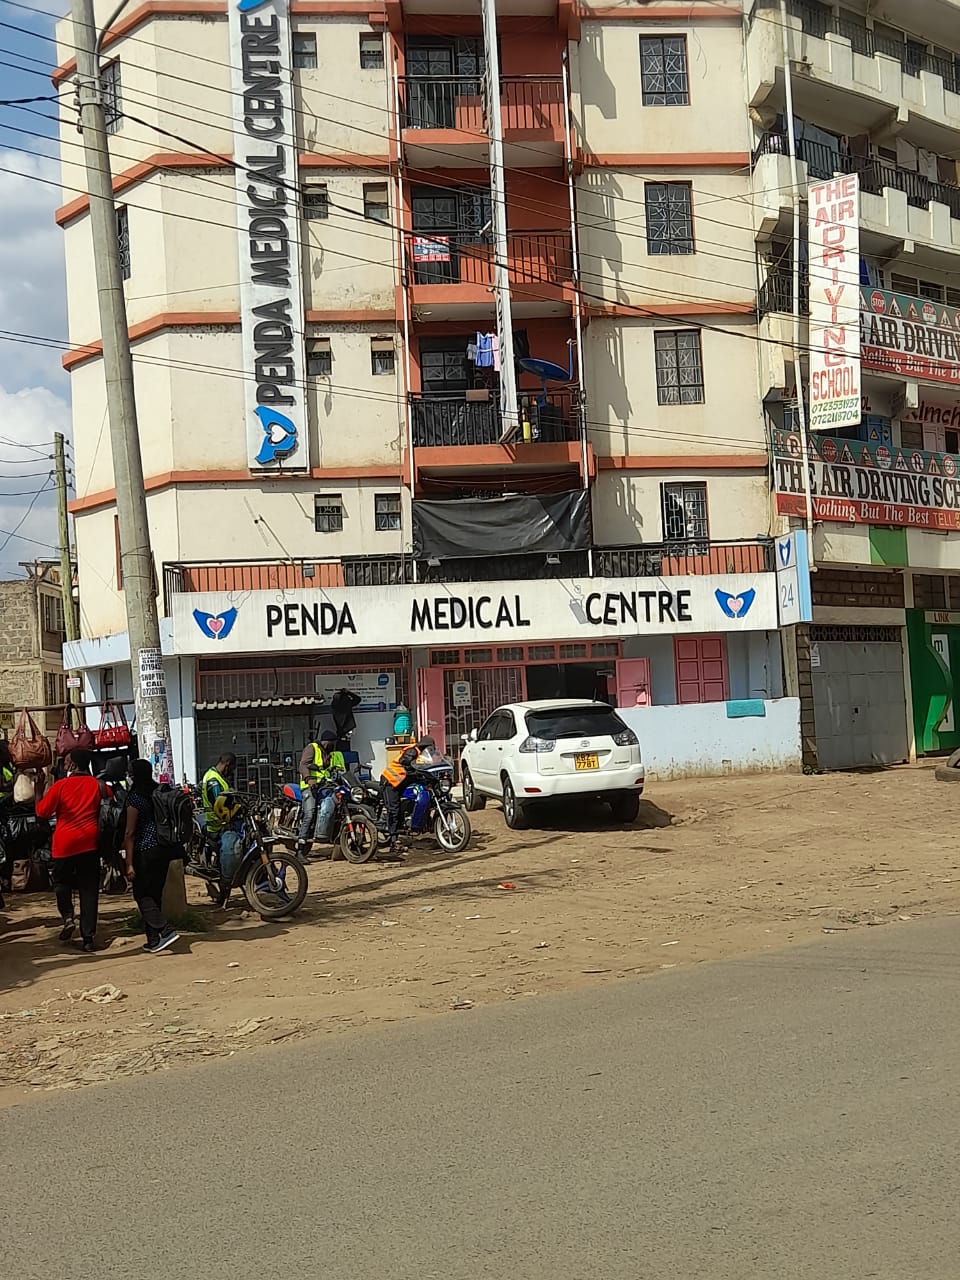 Penda Medical Centre